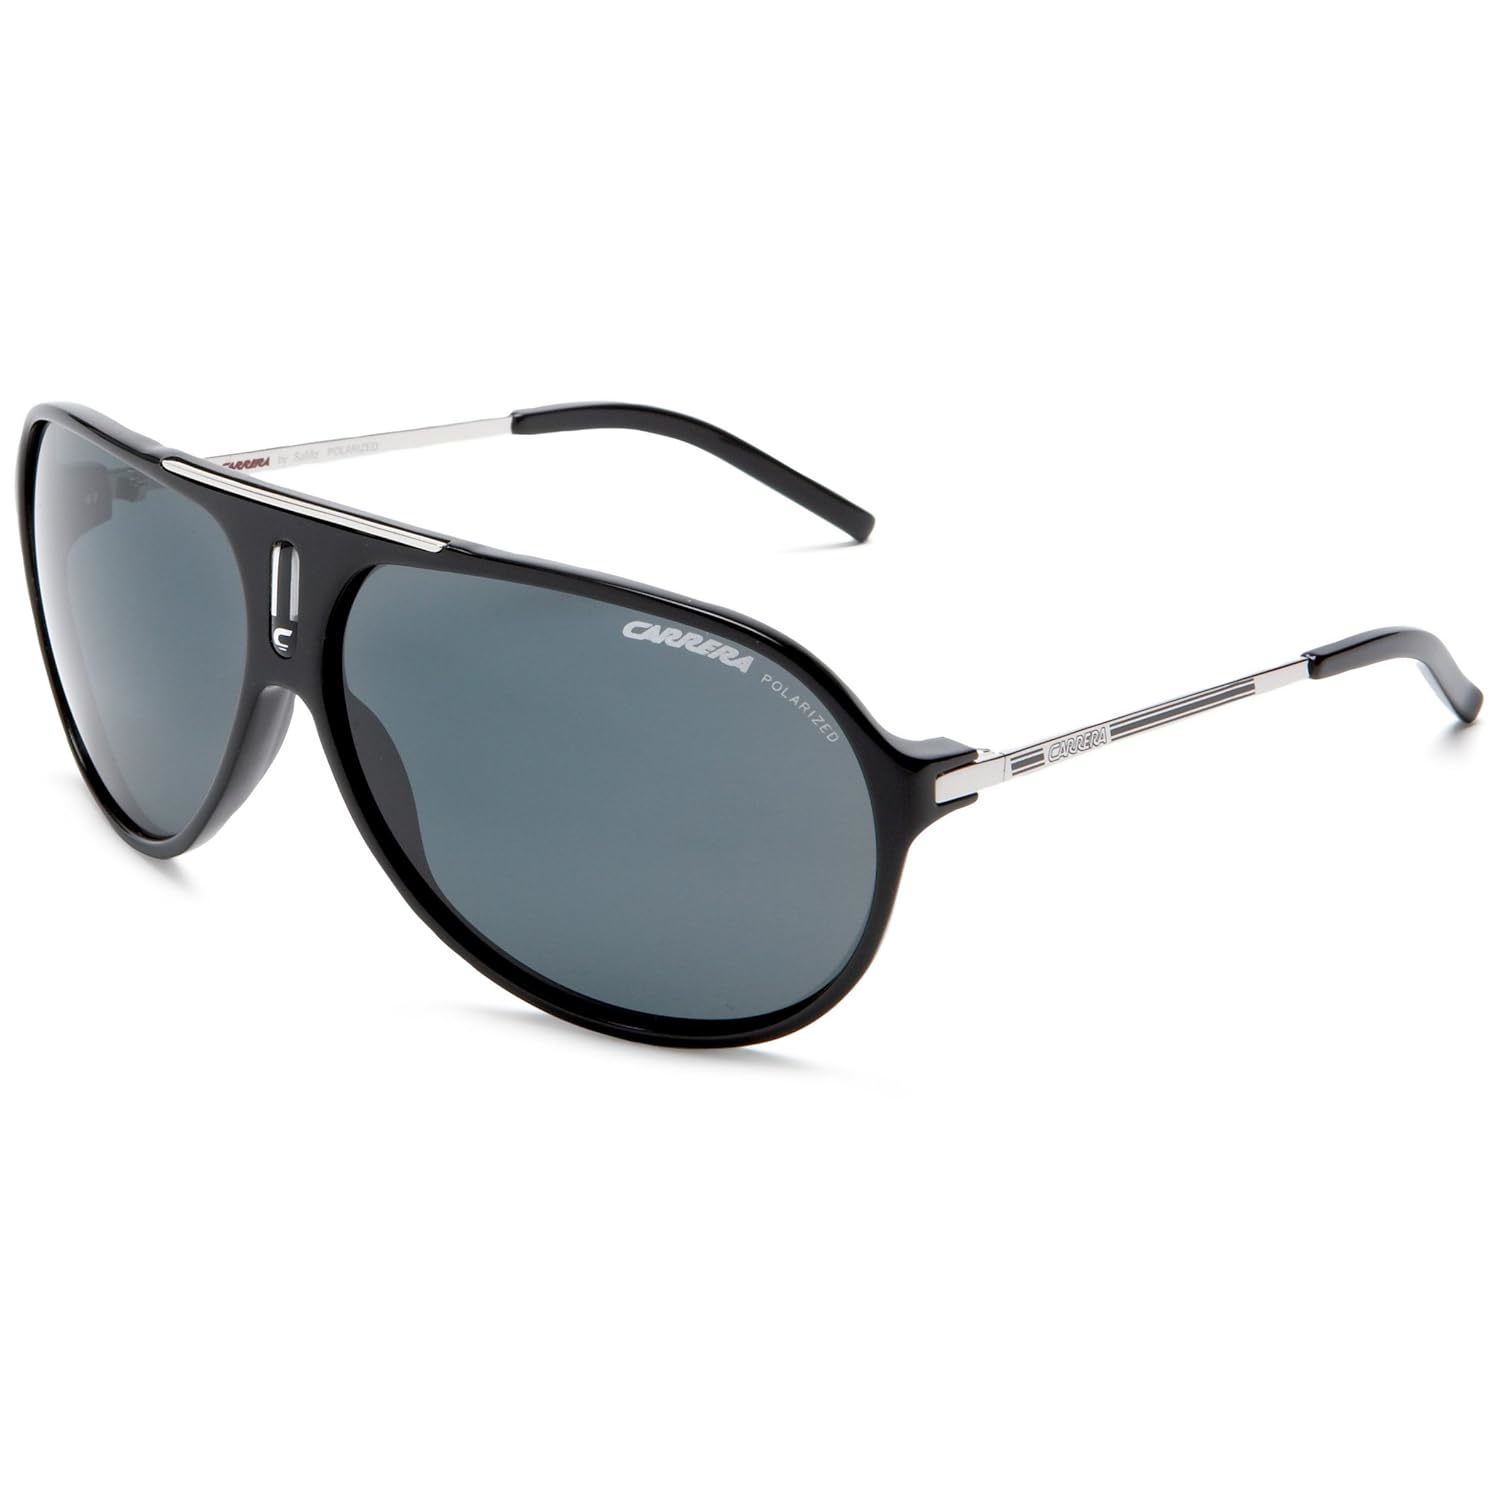 Carrera unisex adult Hot/S Sunglasses, Black and Palladium Frame/Grey Lens, 64 m - $107.99